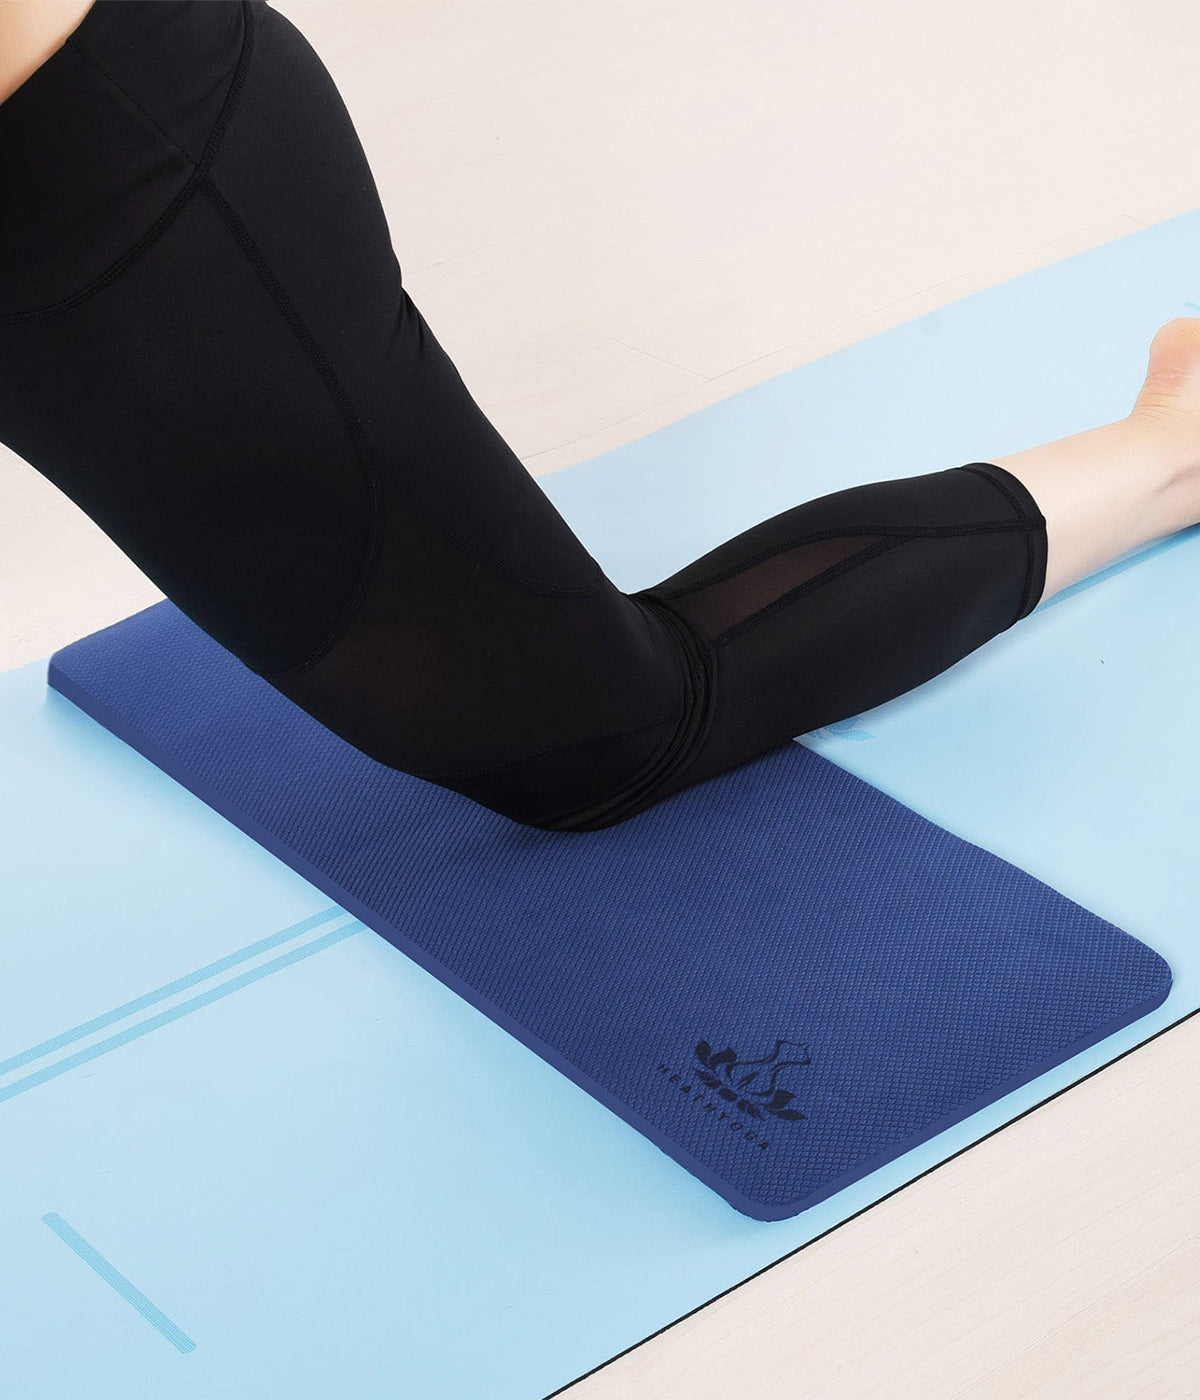 Buy IRIS Yoga Knee Pad - Kneeling Support for Yoga, Eco-Friendly